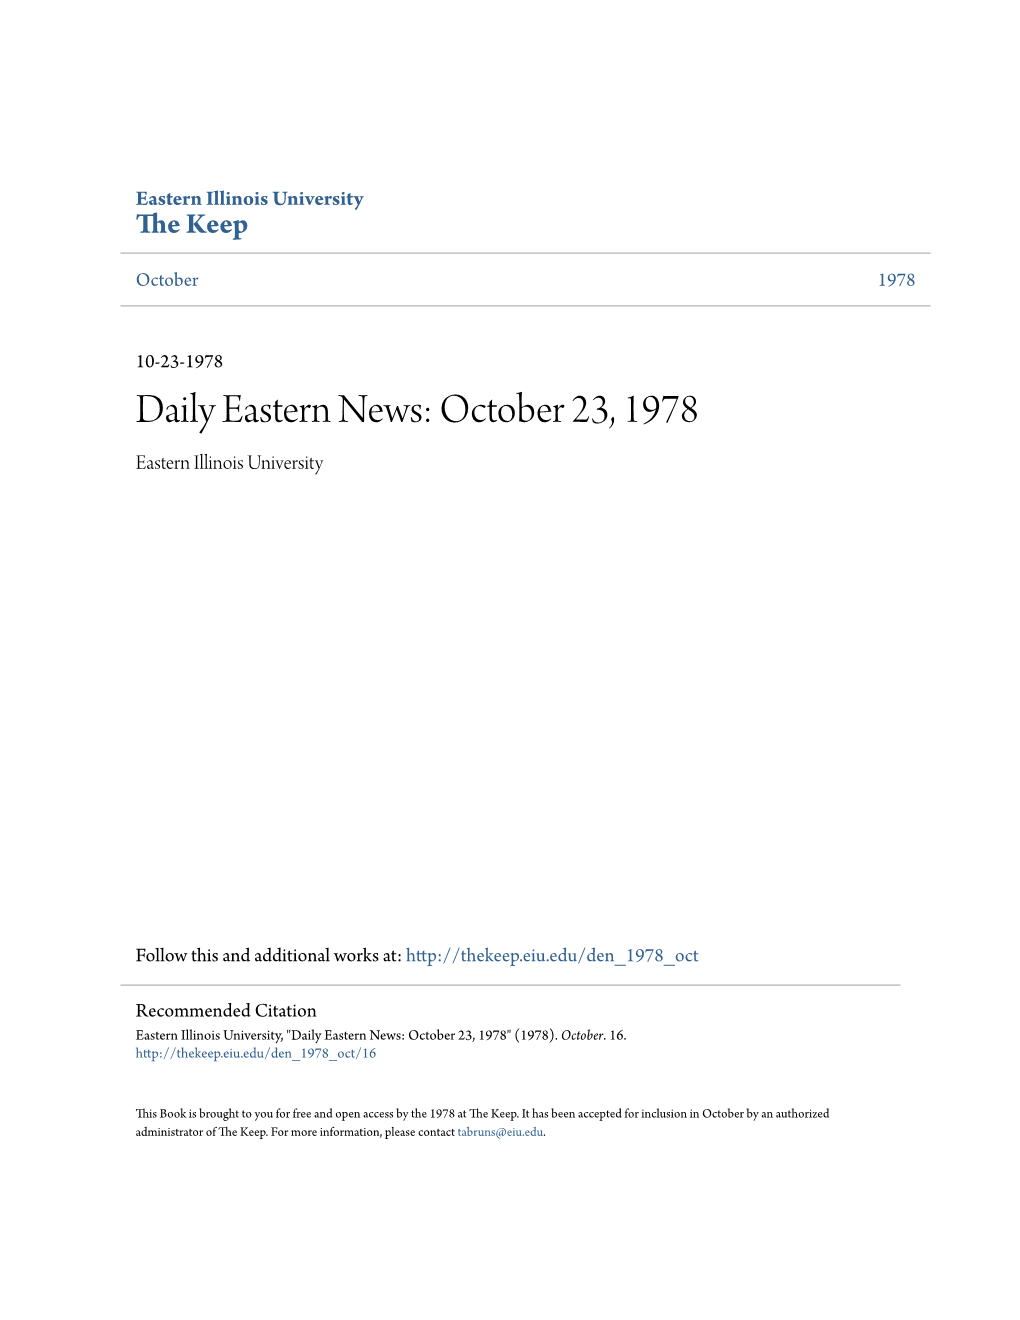 Eastern News: October 23, 1978 Eastern Illinois University